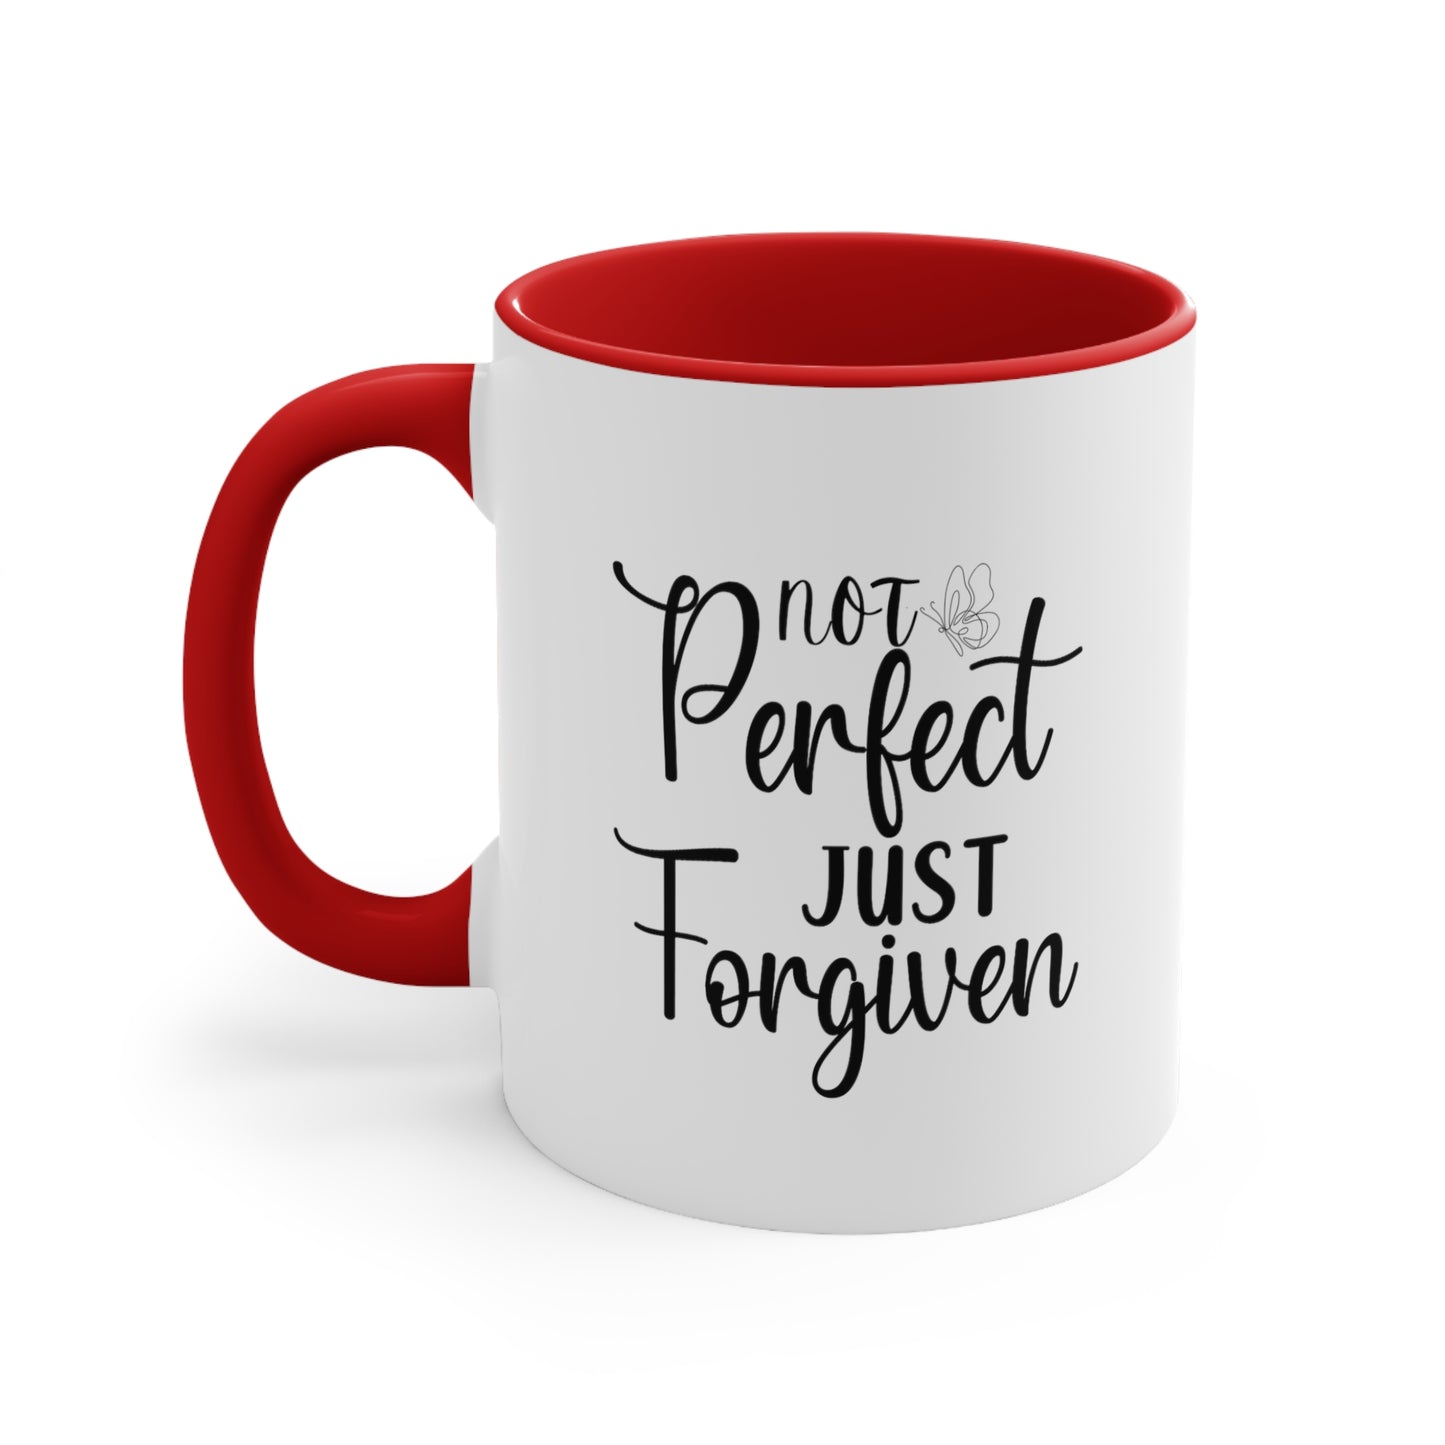 Not Perfect Accent Coffee Mug, 11oz, Christian Gift, Faith Gift, Inspirational Gift